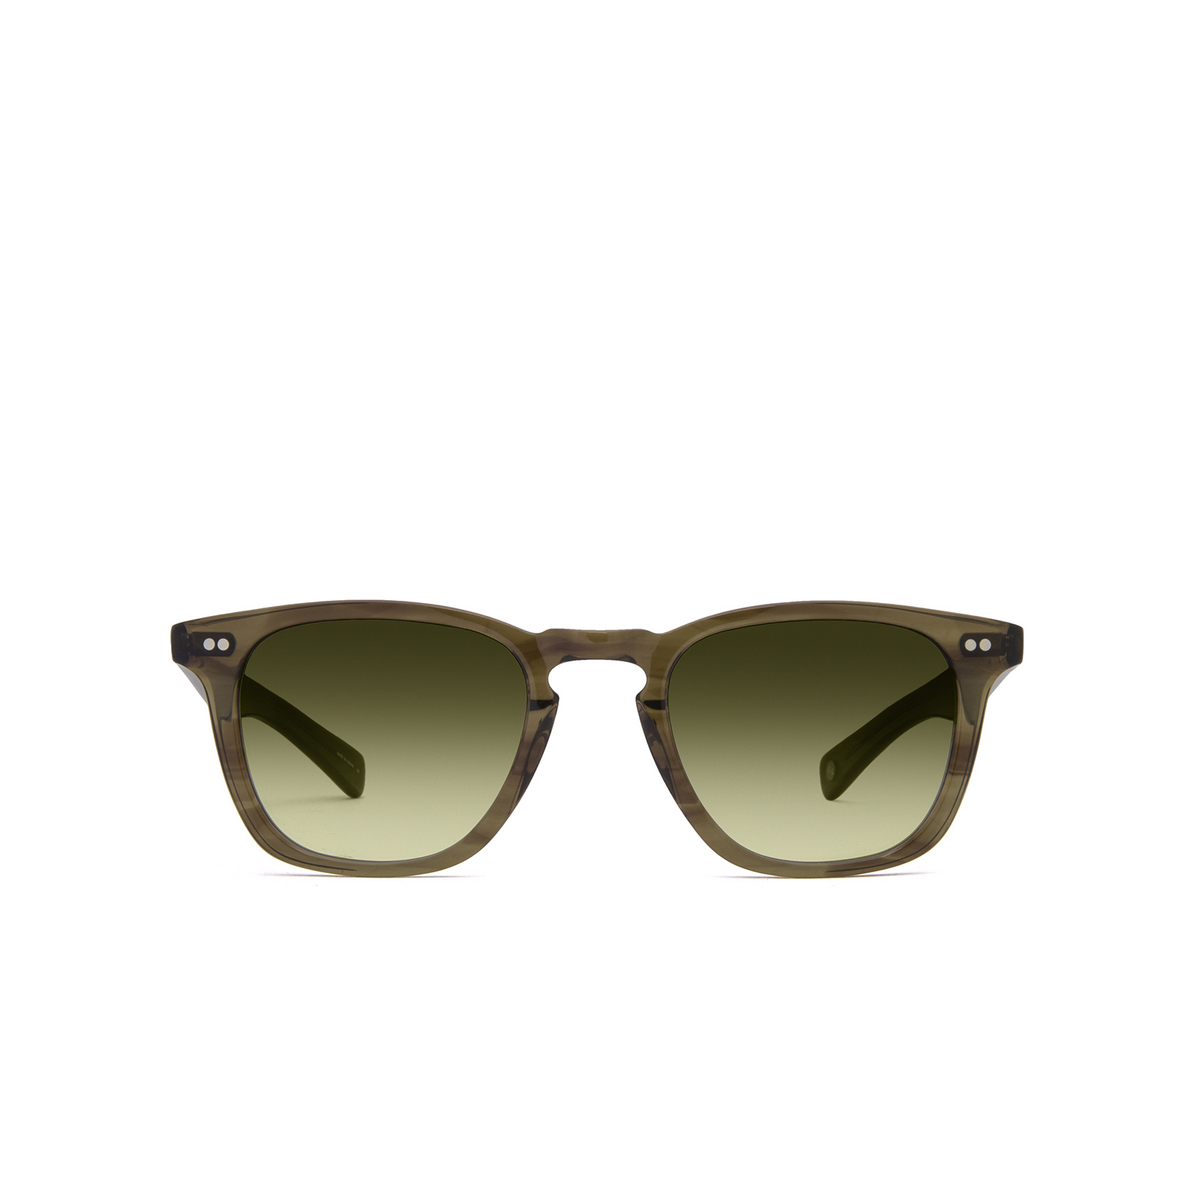 Garrett Leight® Square Sunglasses: Glco X Jenni Kayne Sun color Ot/og Olive Tortoise/olive Gradient - front view